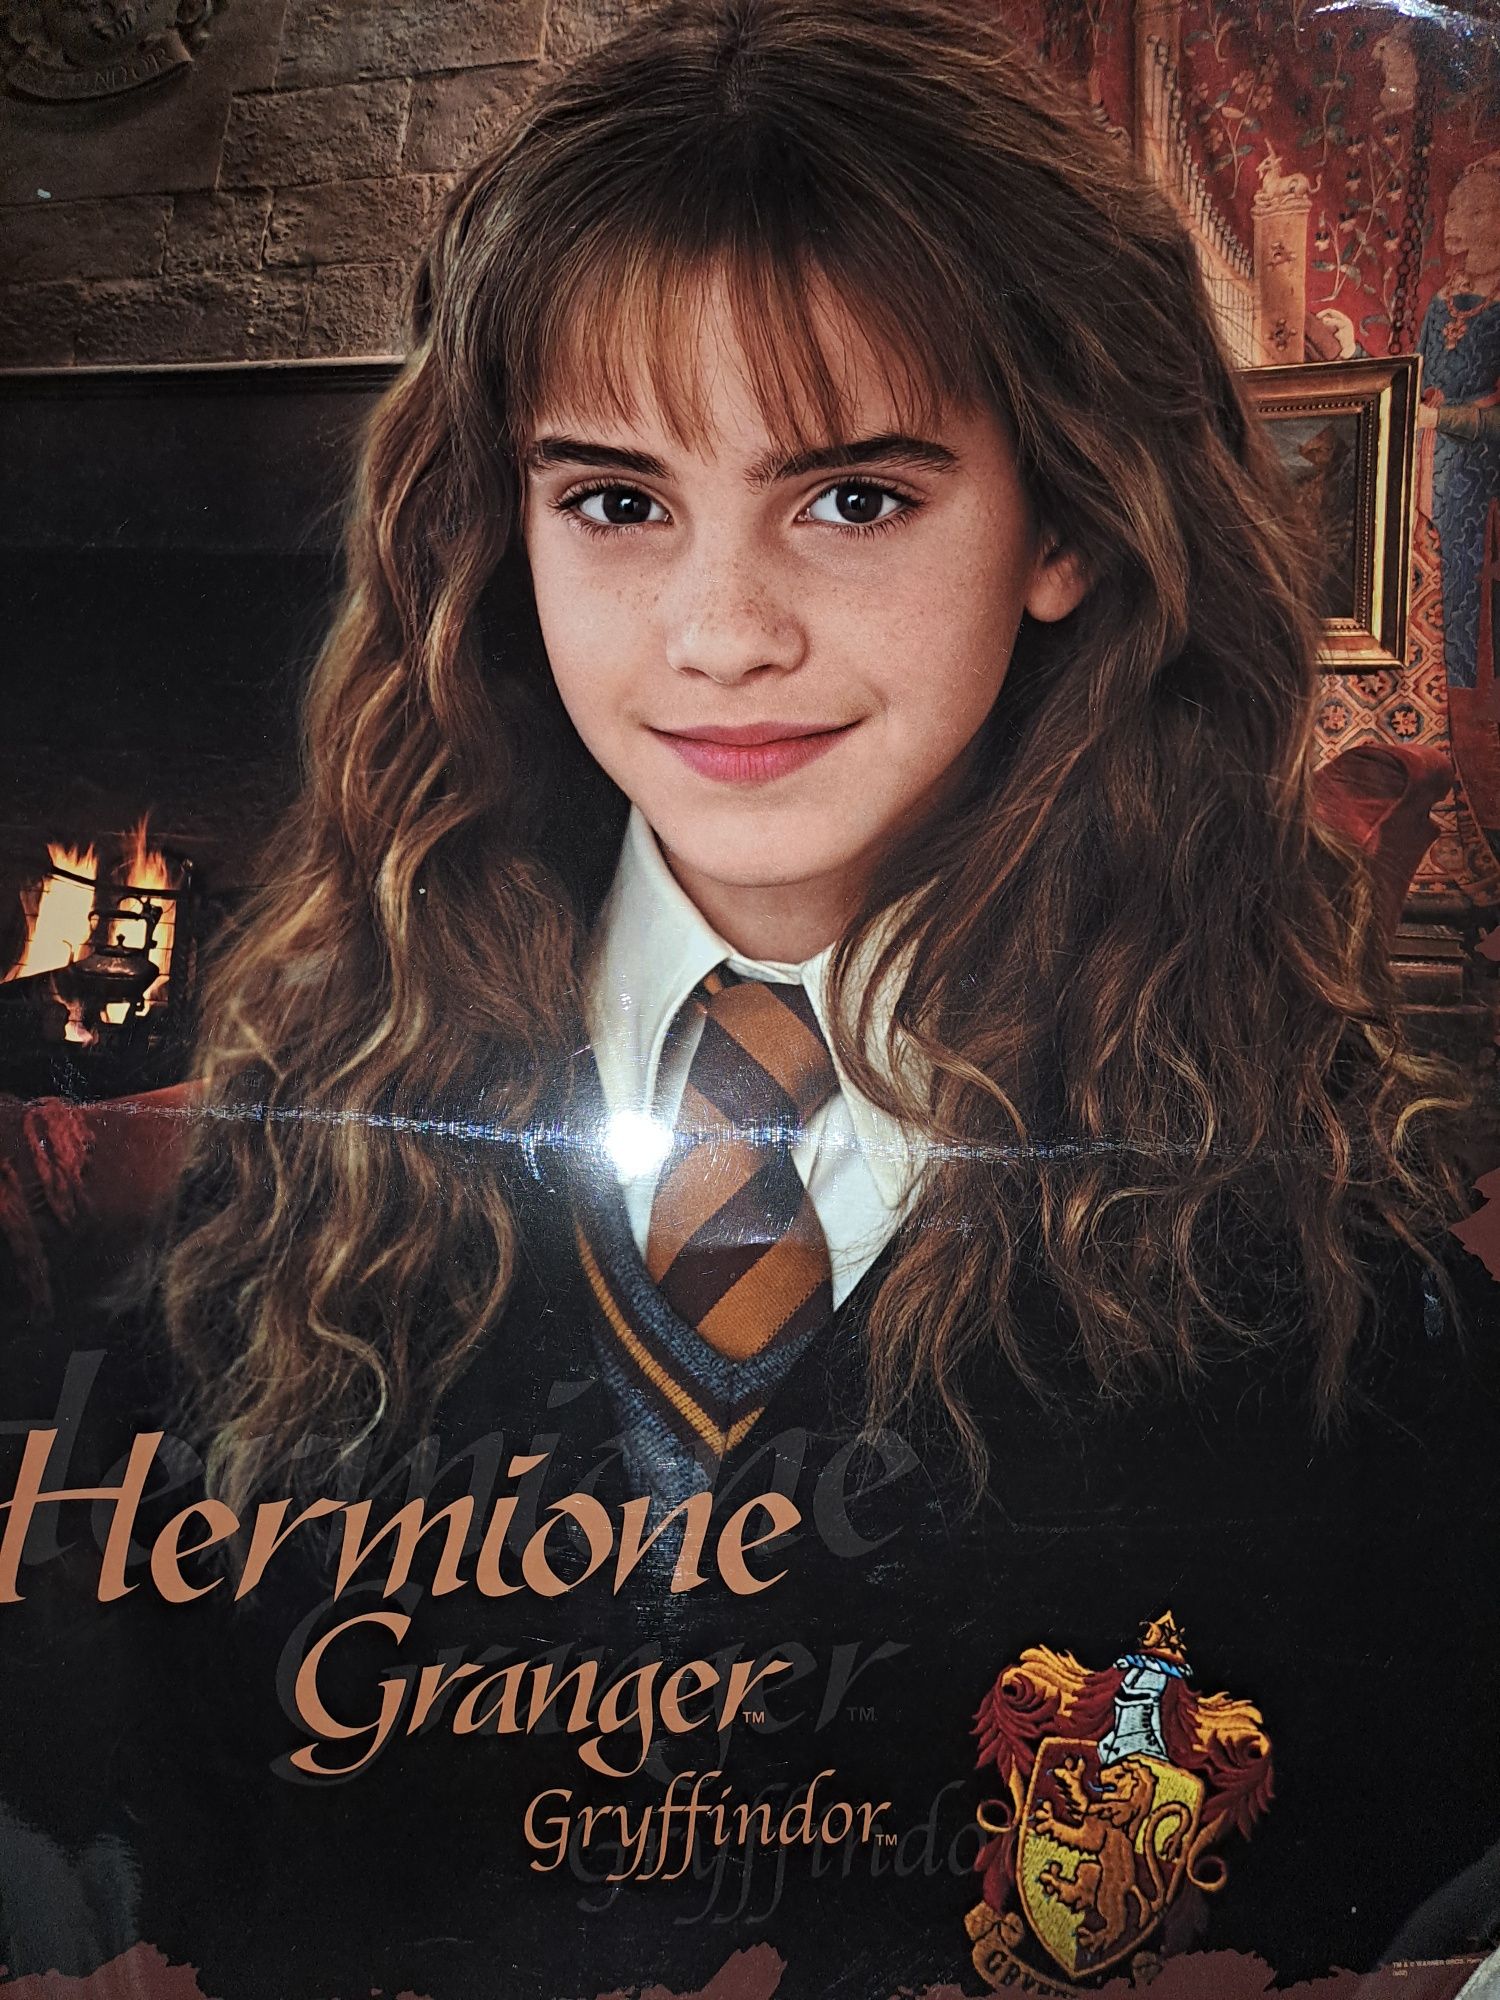 Harry potter afisi/ poster